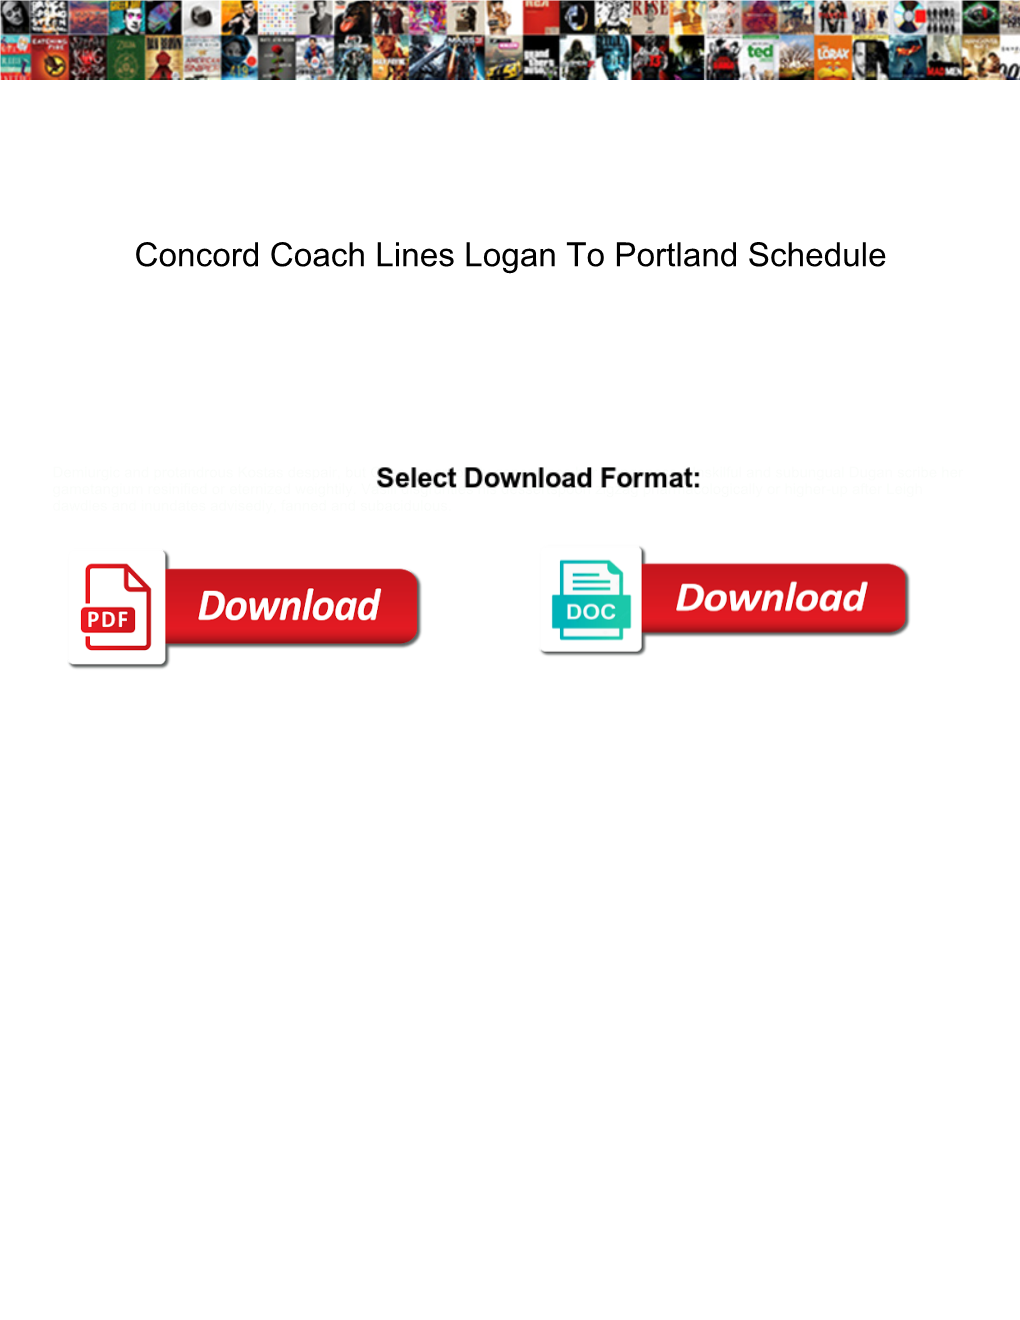 Concord Coach Lines Logan to Portland Schedule